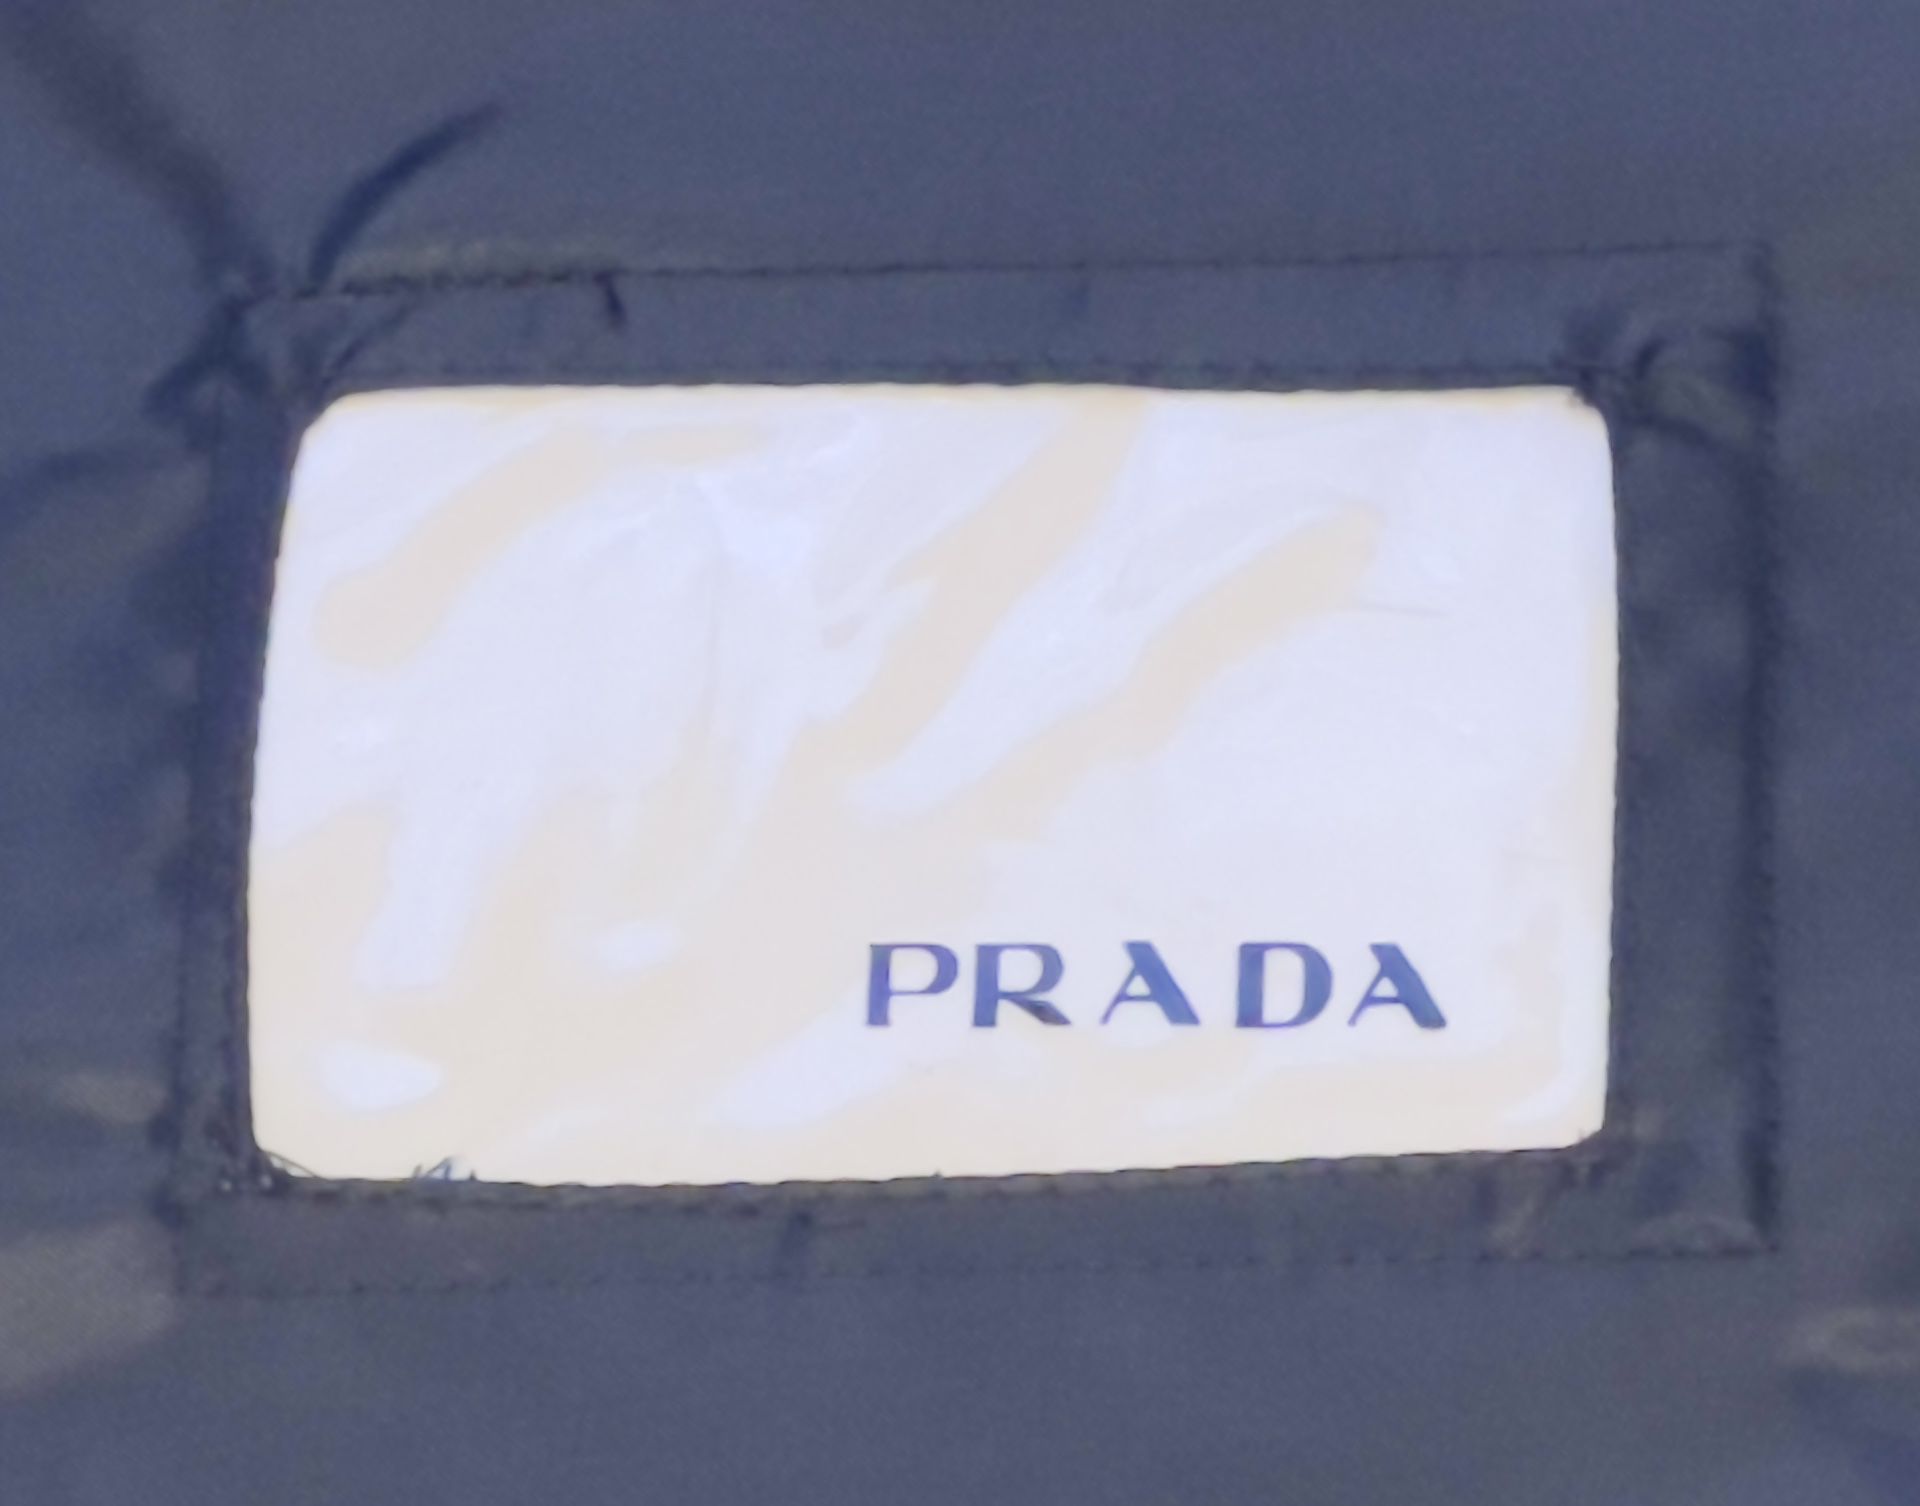 Prada Garment Bag Zipper Closure With Logo Hanger